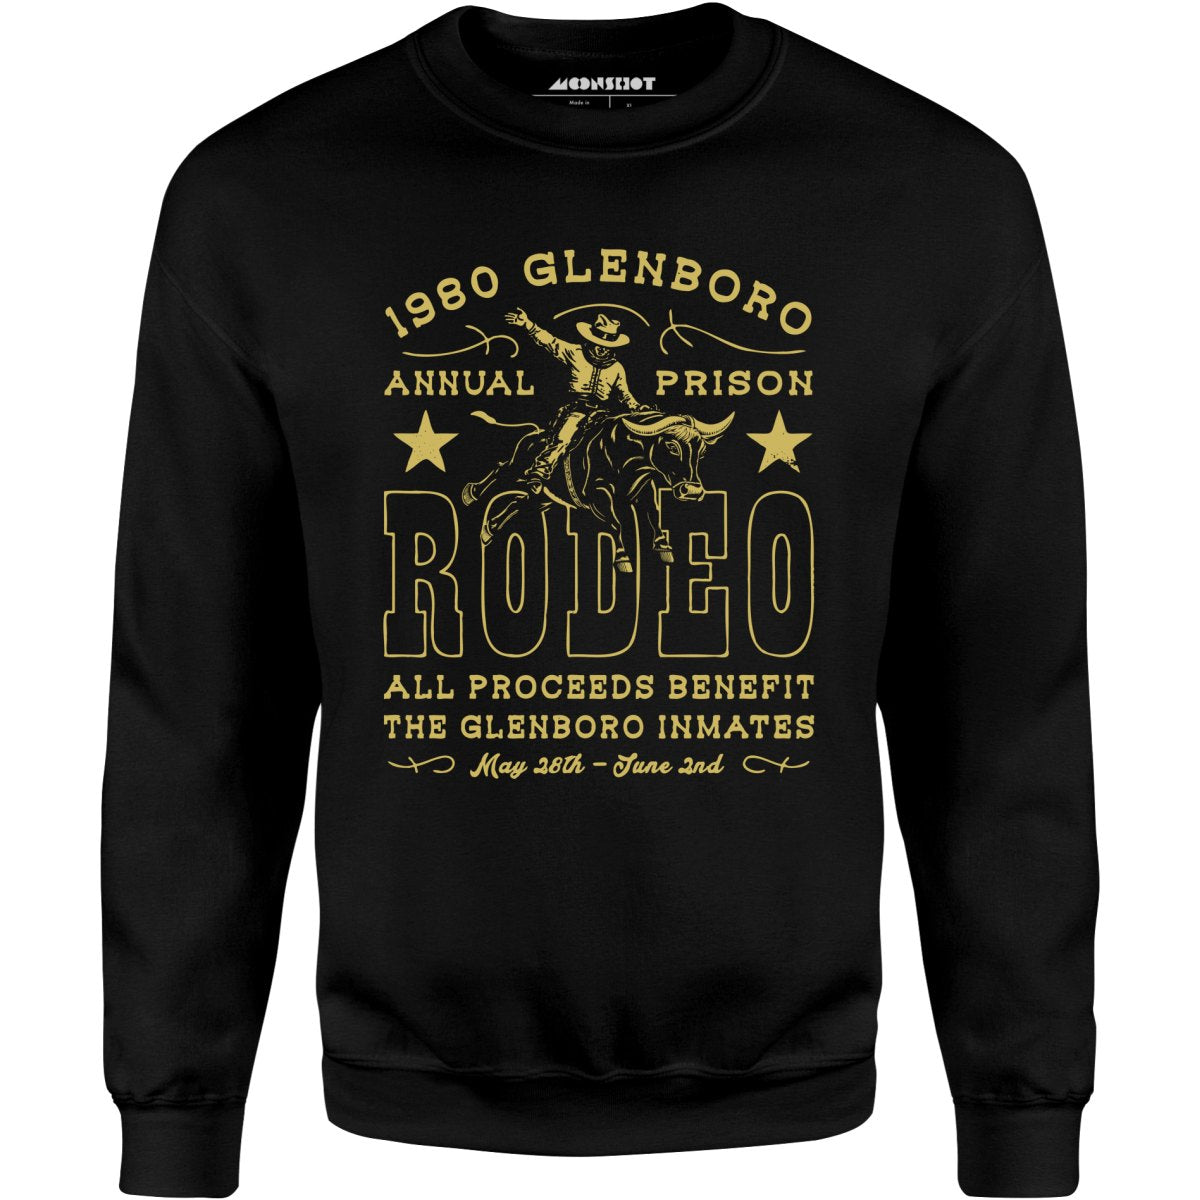 1980 Glenboro Annual Prison Rodeo - Unisex Sweatshirt